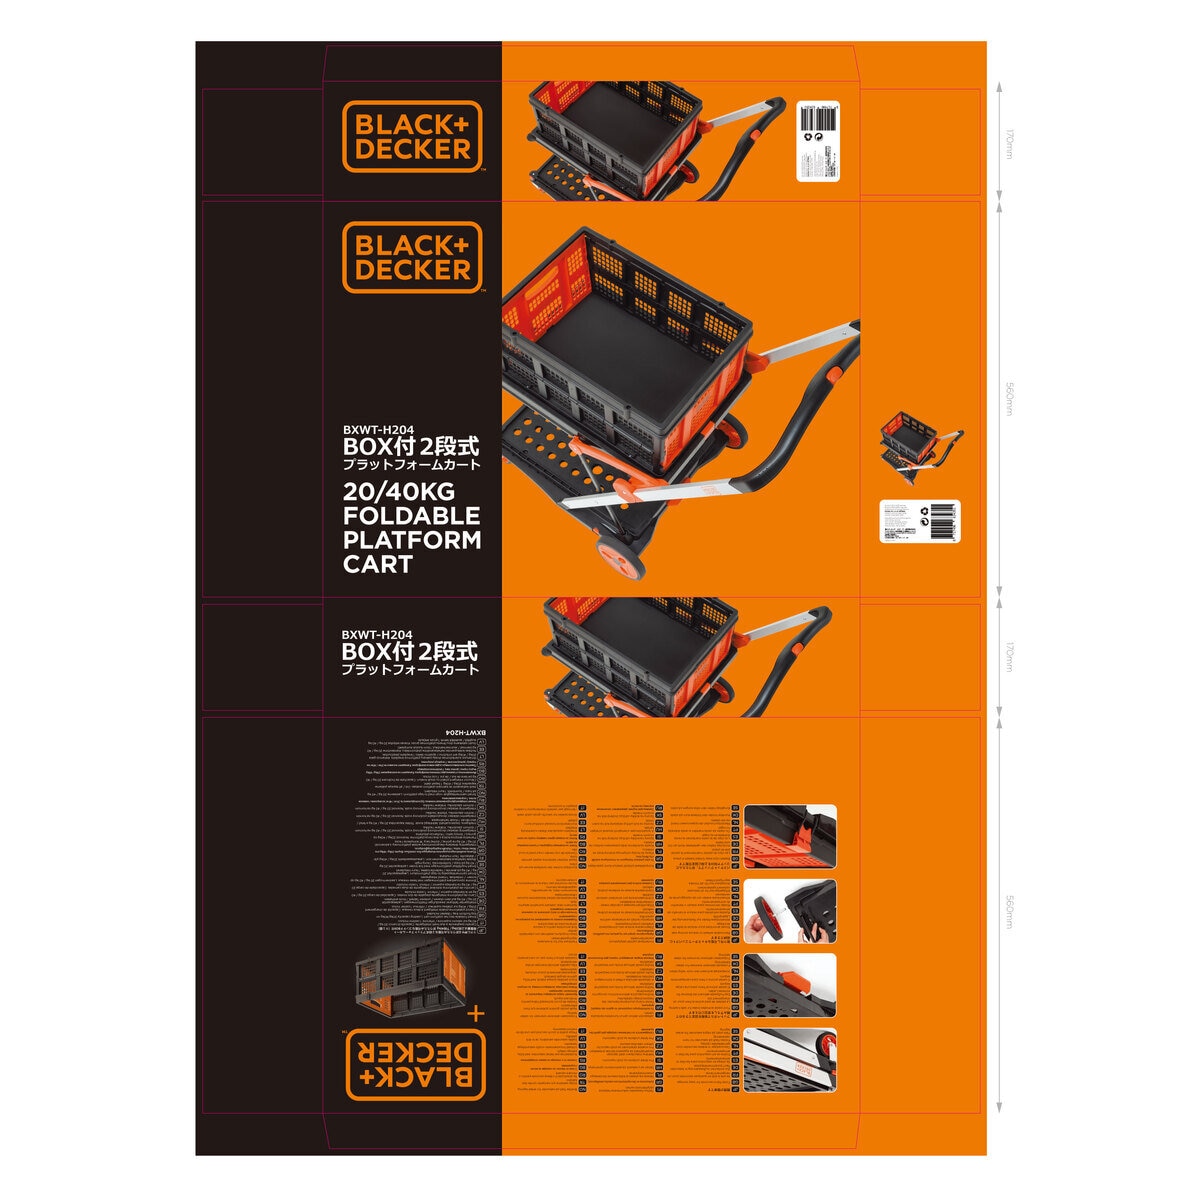 BLACKDECKER ブラックデッカー BOX付２段式 プラットフォームカート　折りたたみ式2段カート BXWT-H204 - 1